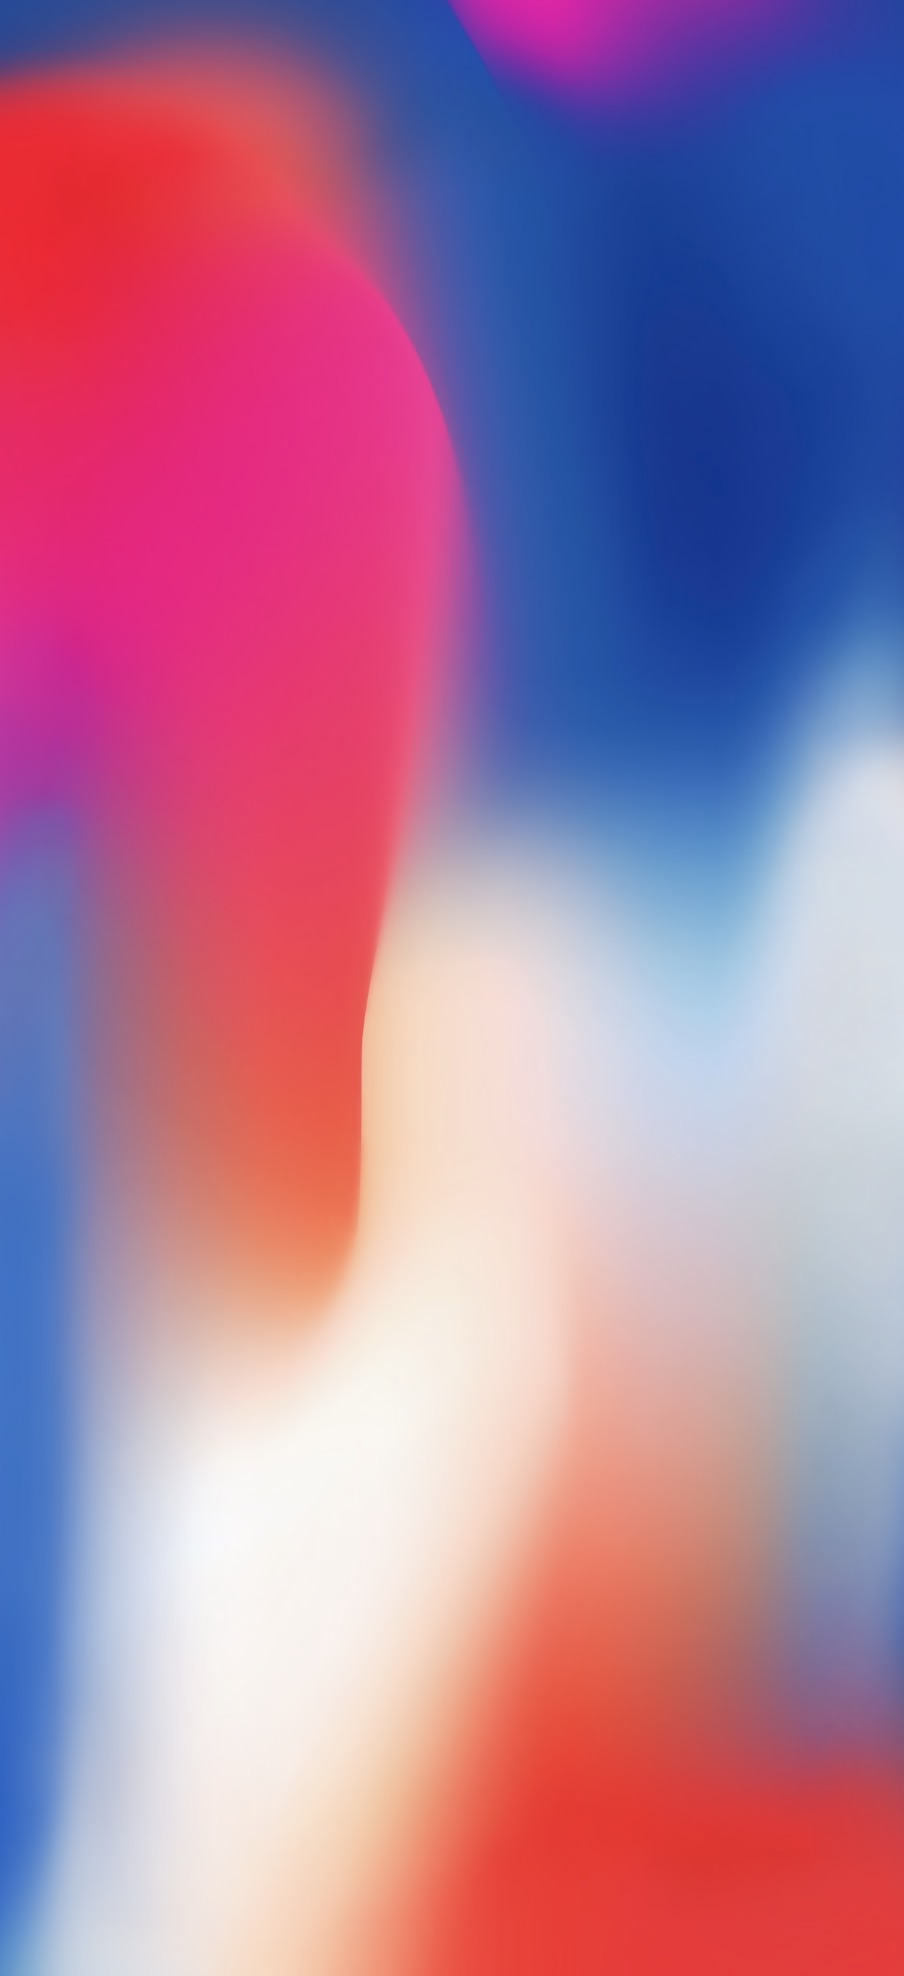 iPhone X Default LIVE Wallpaper (Pink) iOS 11 Stock